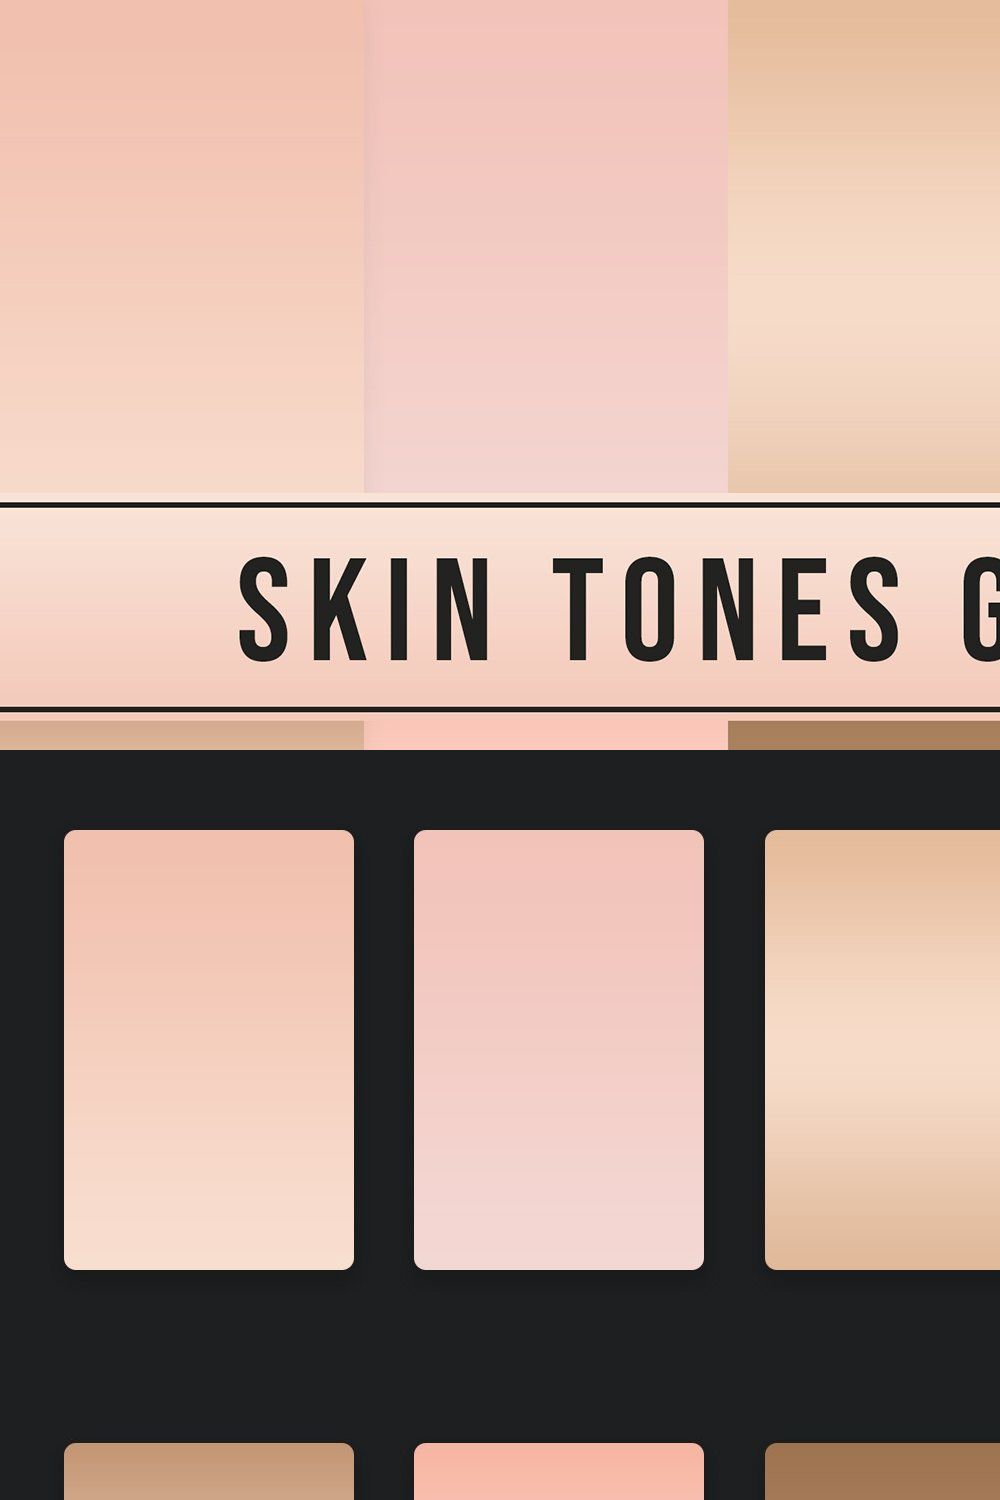 Skin Tones Gradients pinterest preview image.